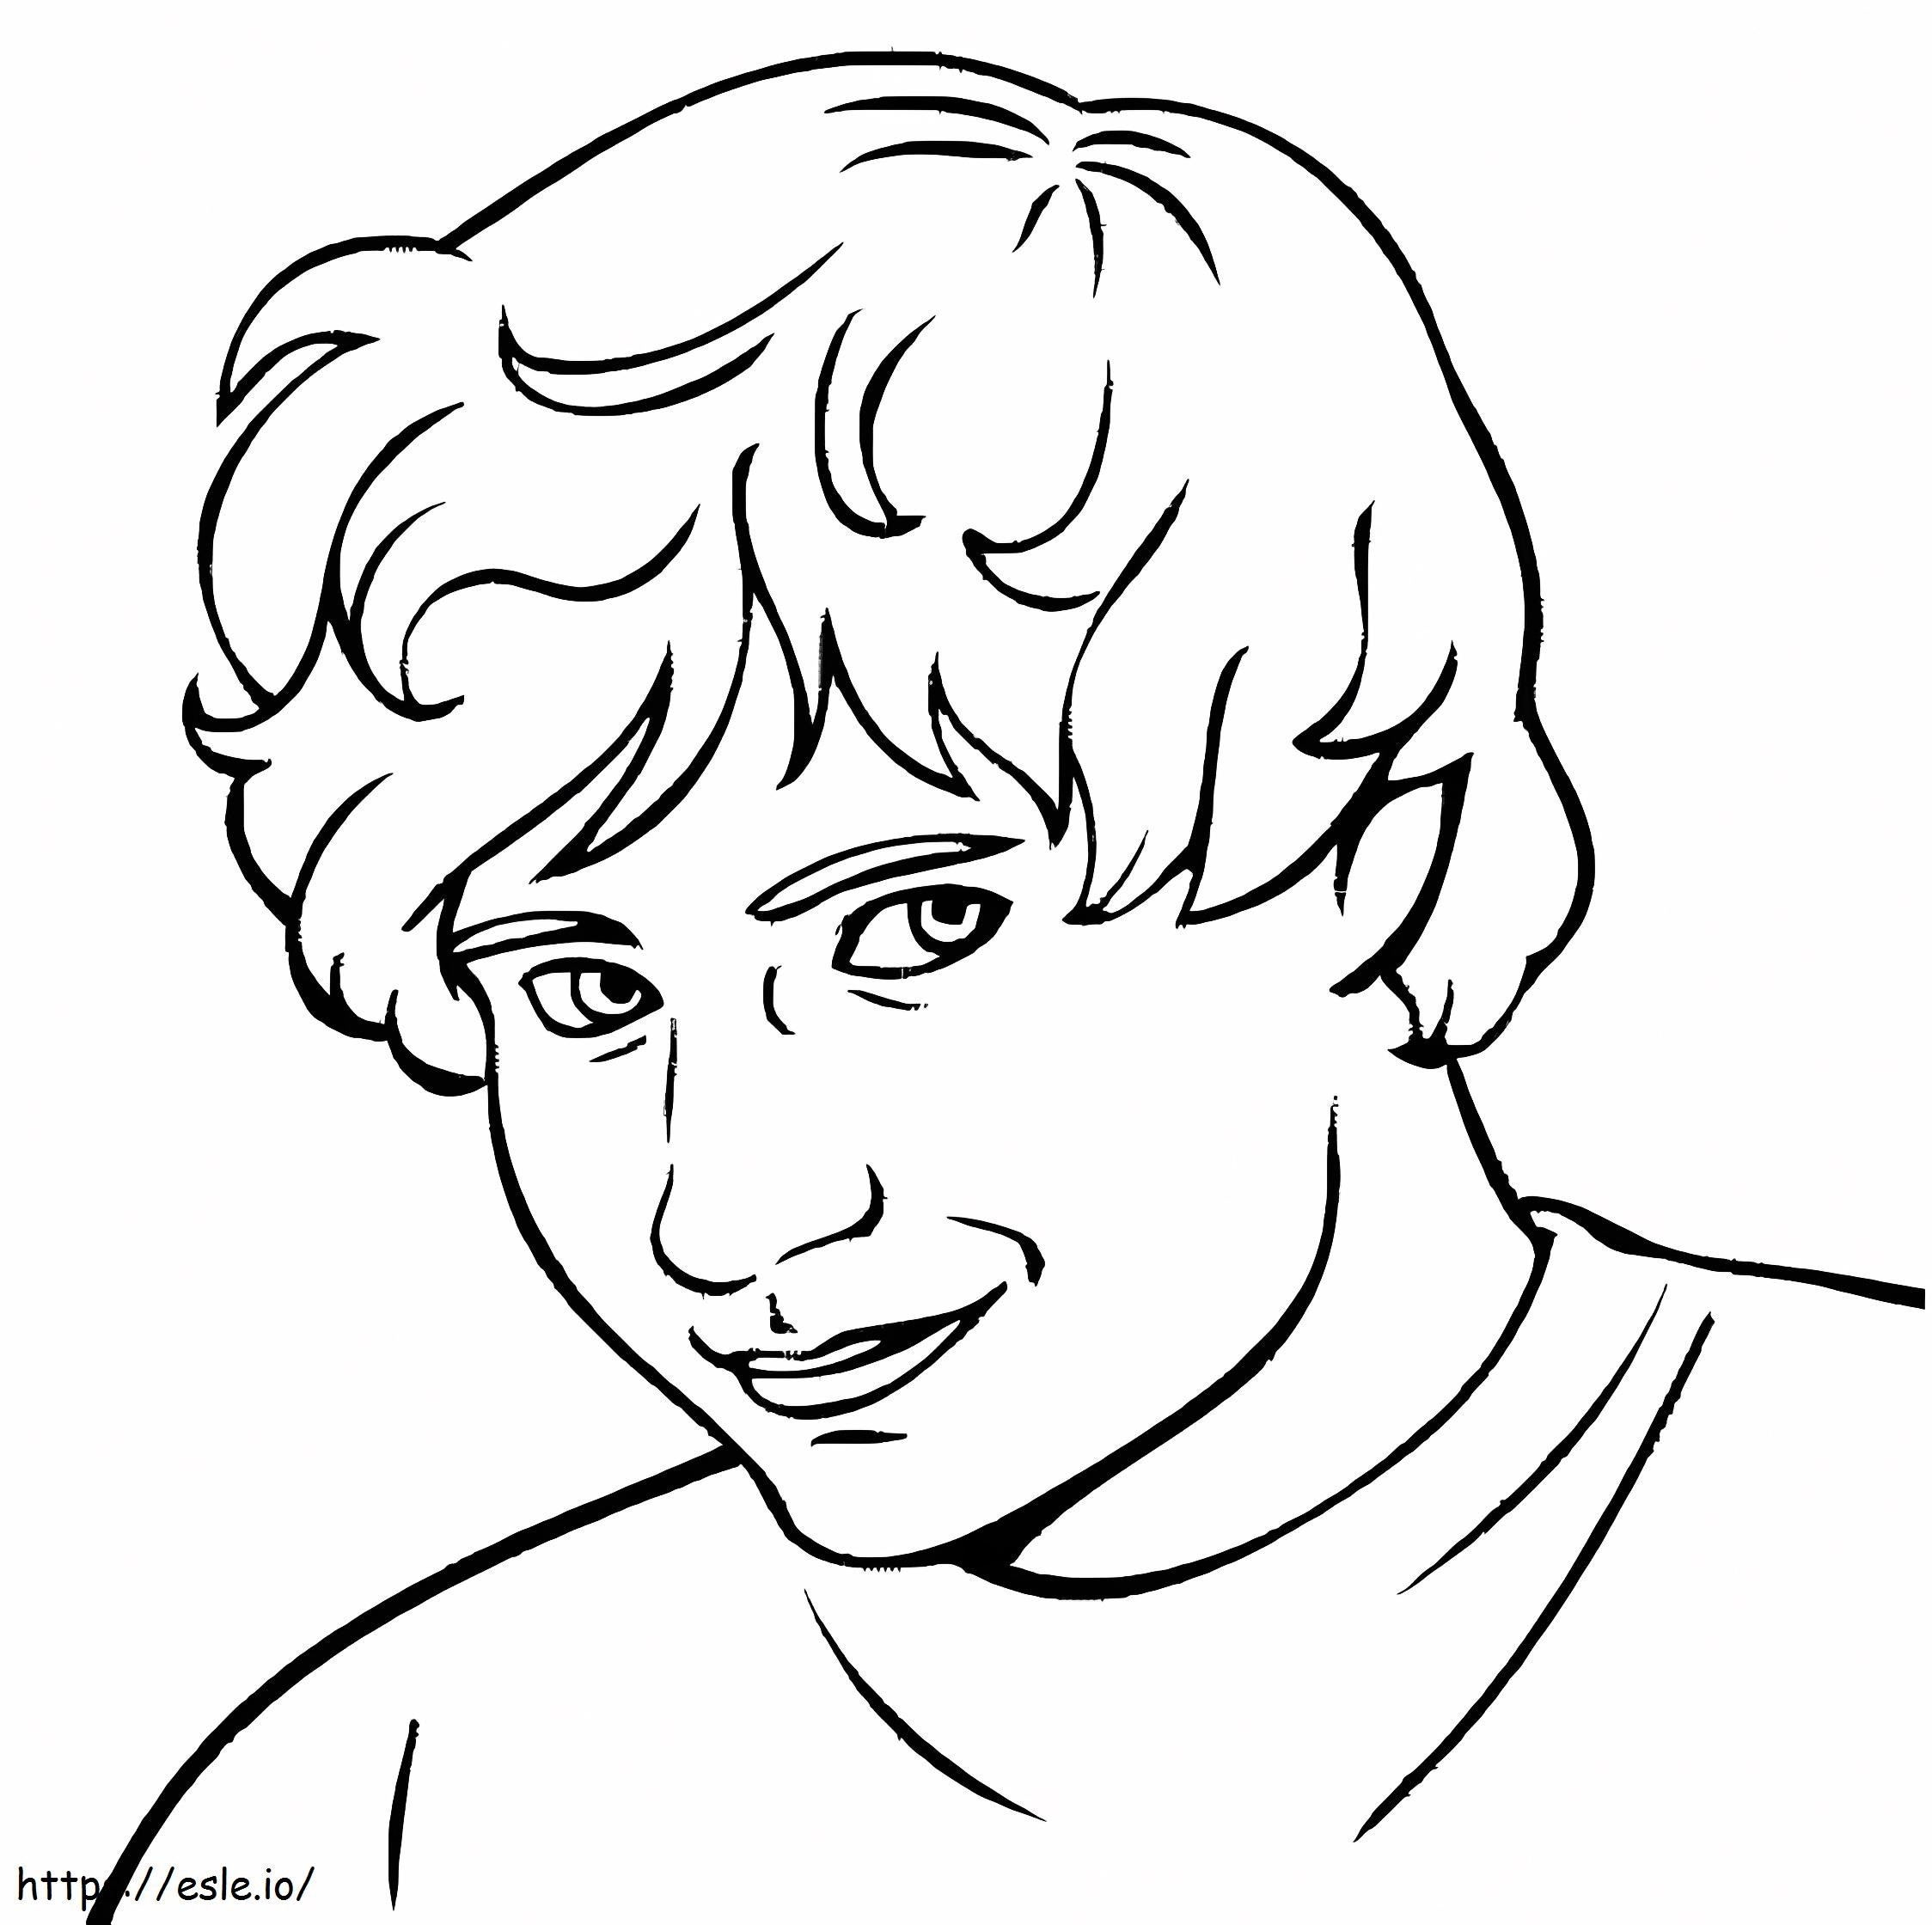 Ed Sheeran Smiling coloring page